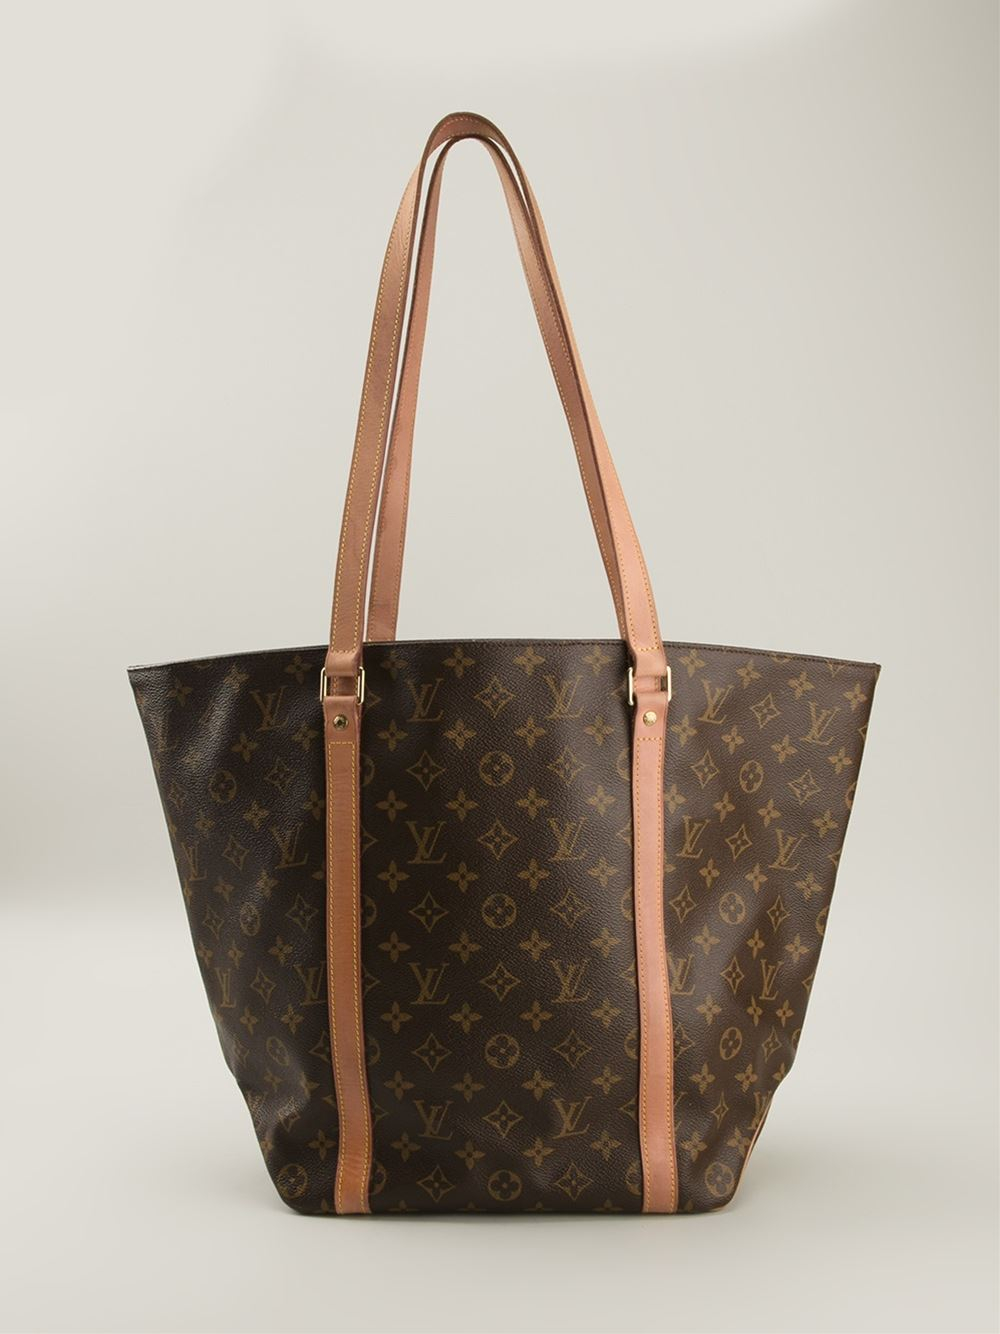 Louis Vuitton Bird Print Tote Bag in Brown - Lyst